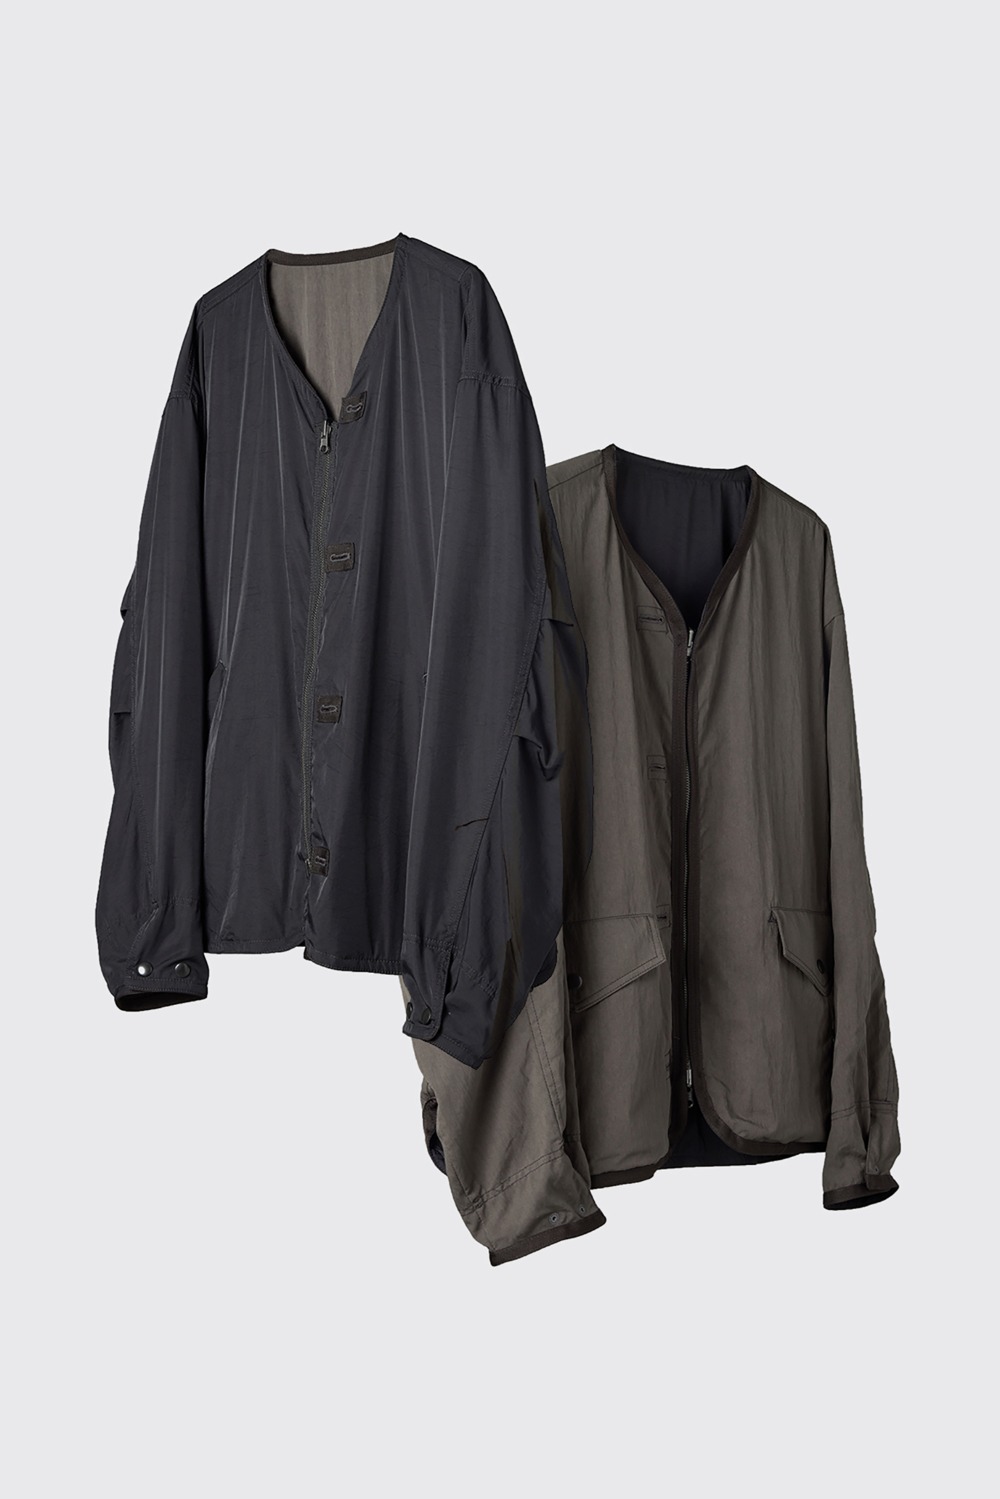 Reversible Lining Jacket Black/Charcoal